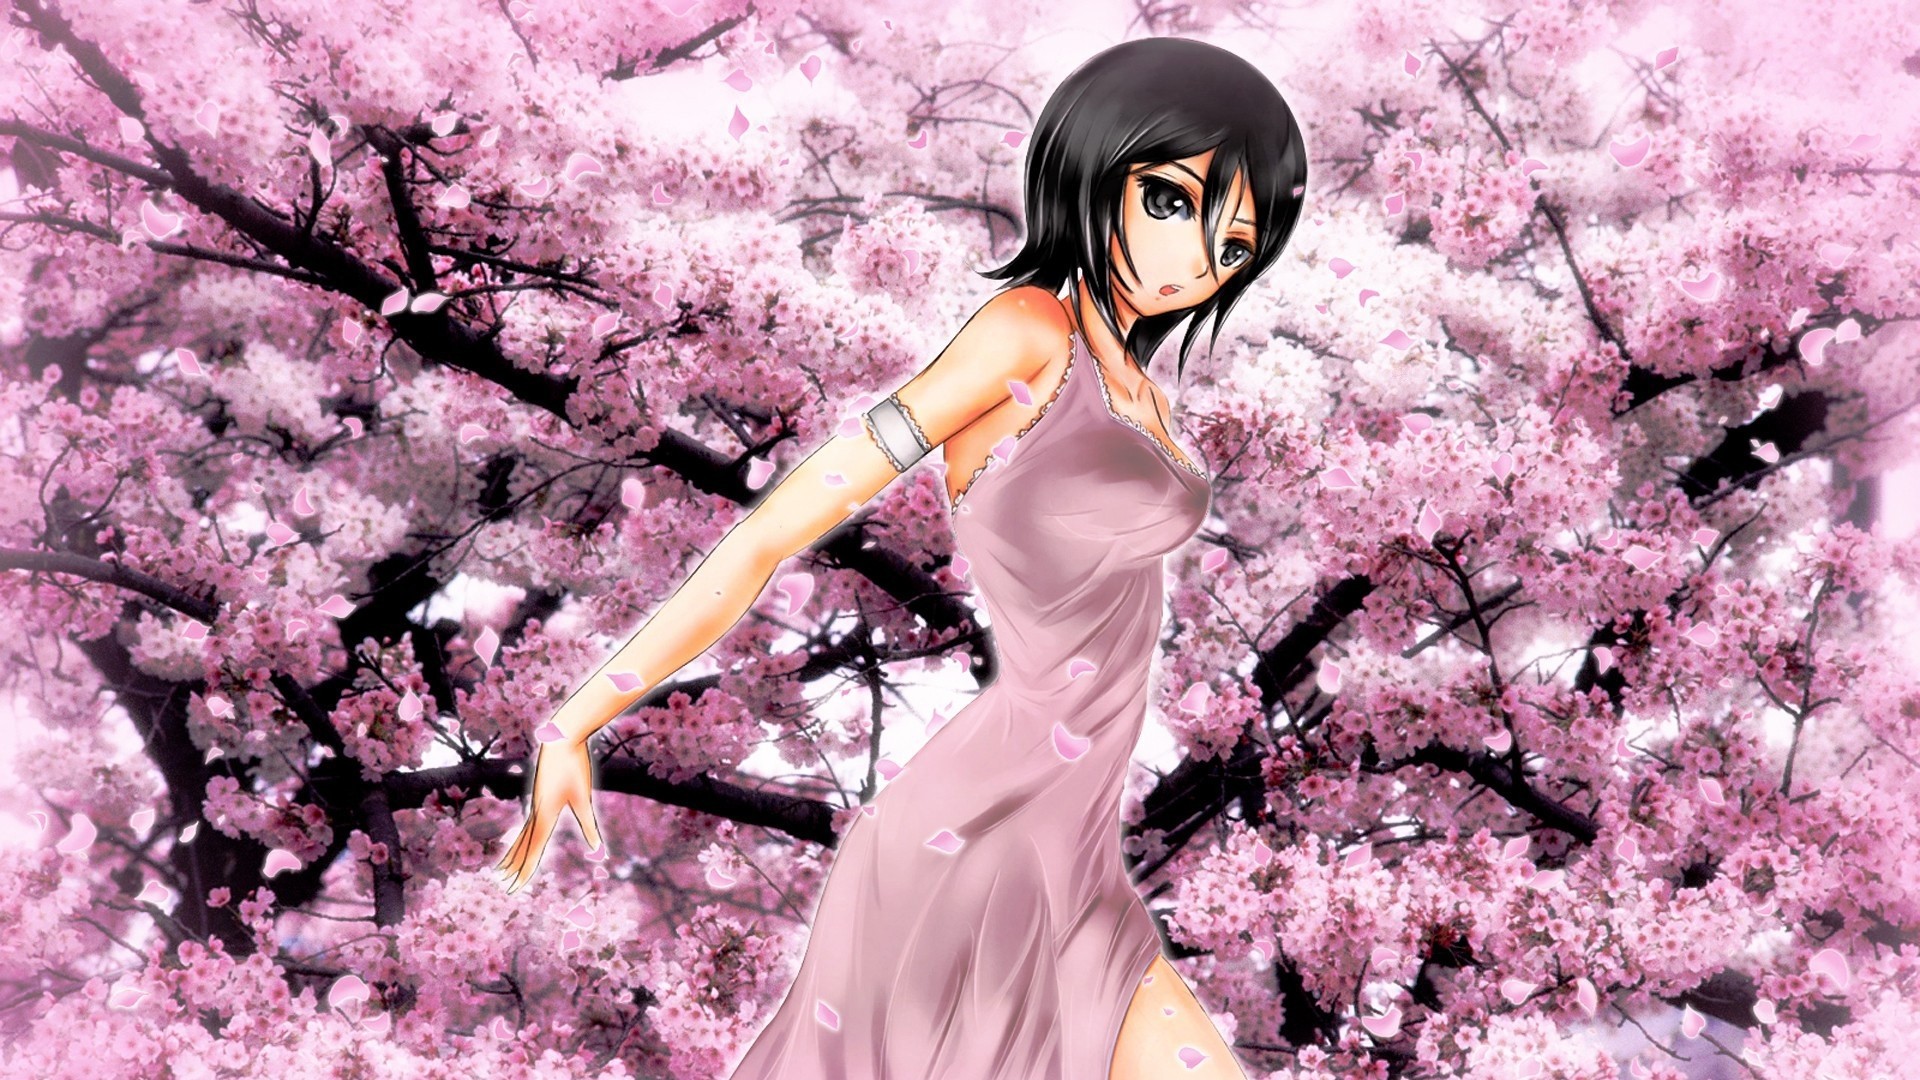 Anime 1920x1080 anime Kuchiki Rukia Bleach cherry blossom anime girls dark hair dress black eyes women women outdoors trees plants dark eyes open mouth